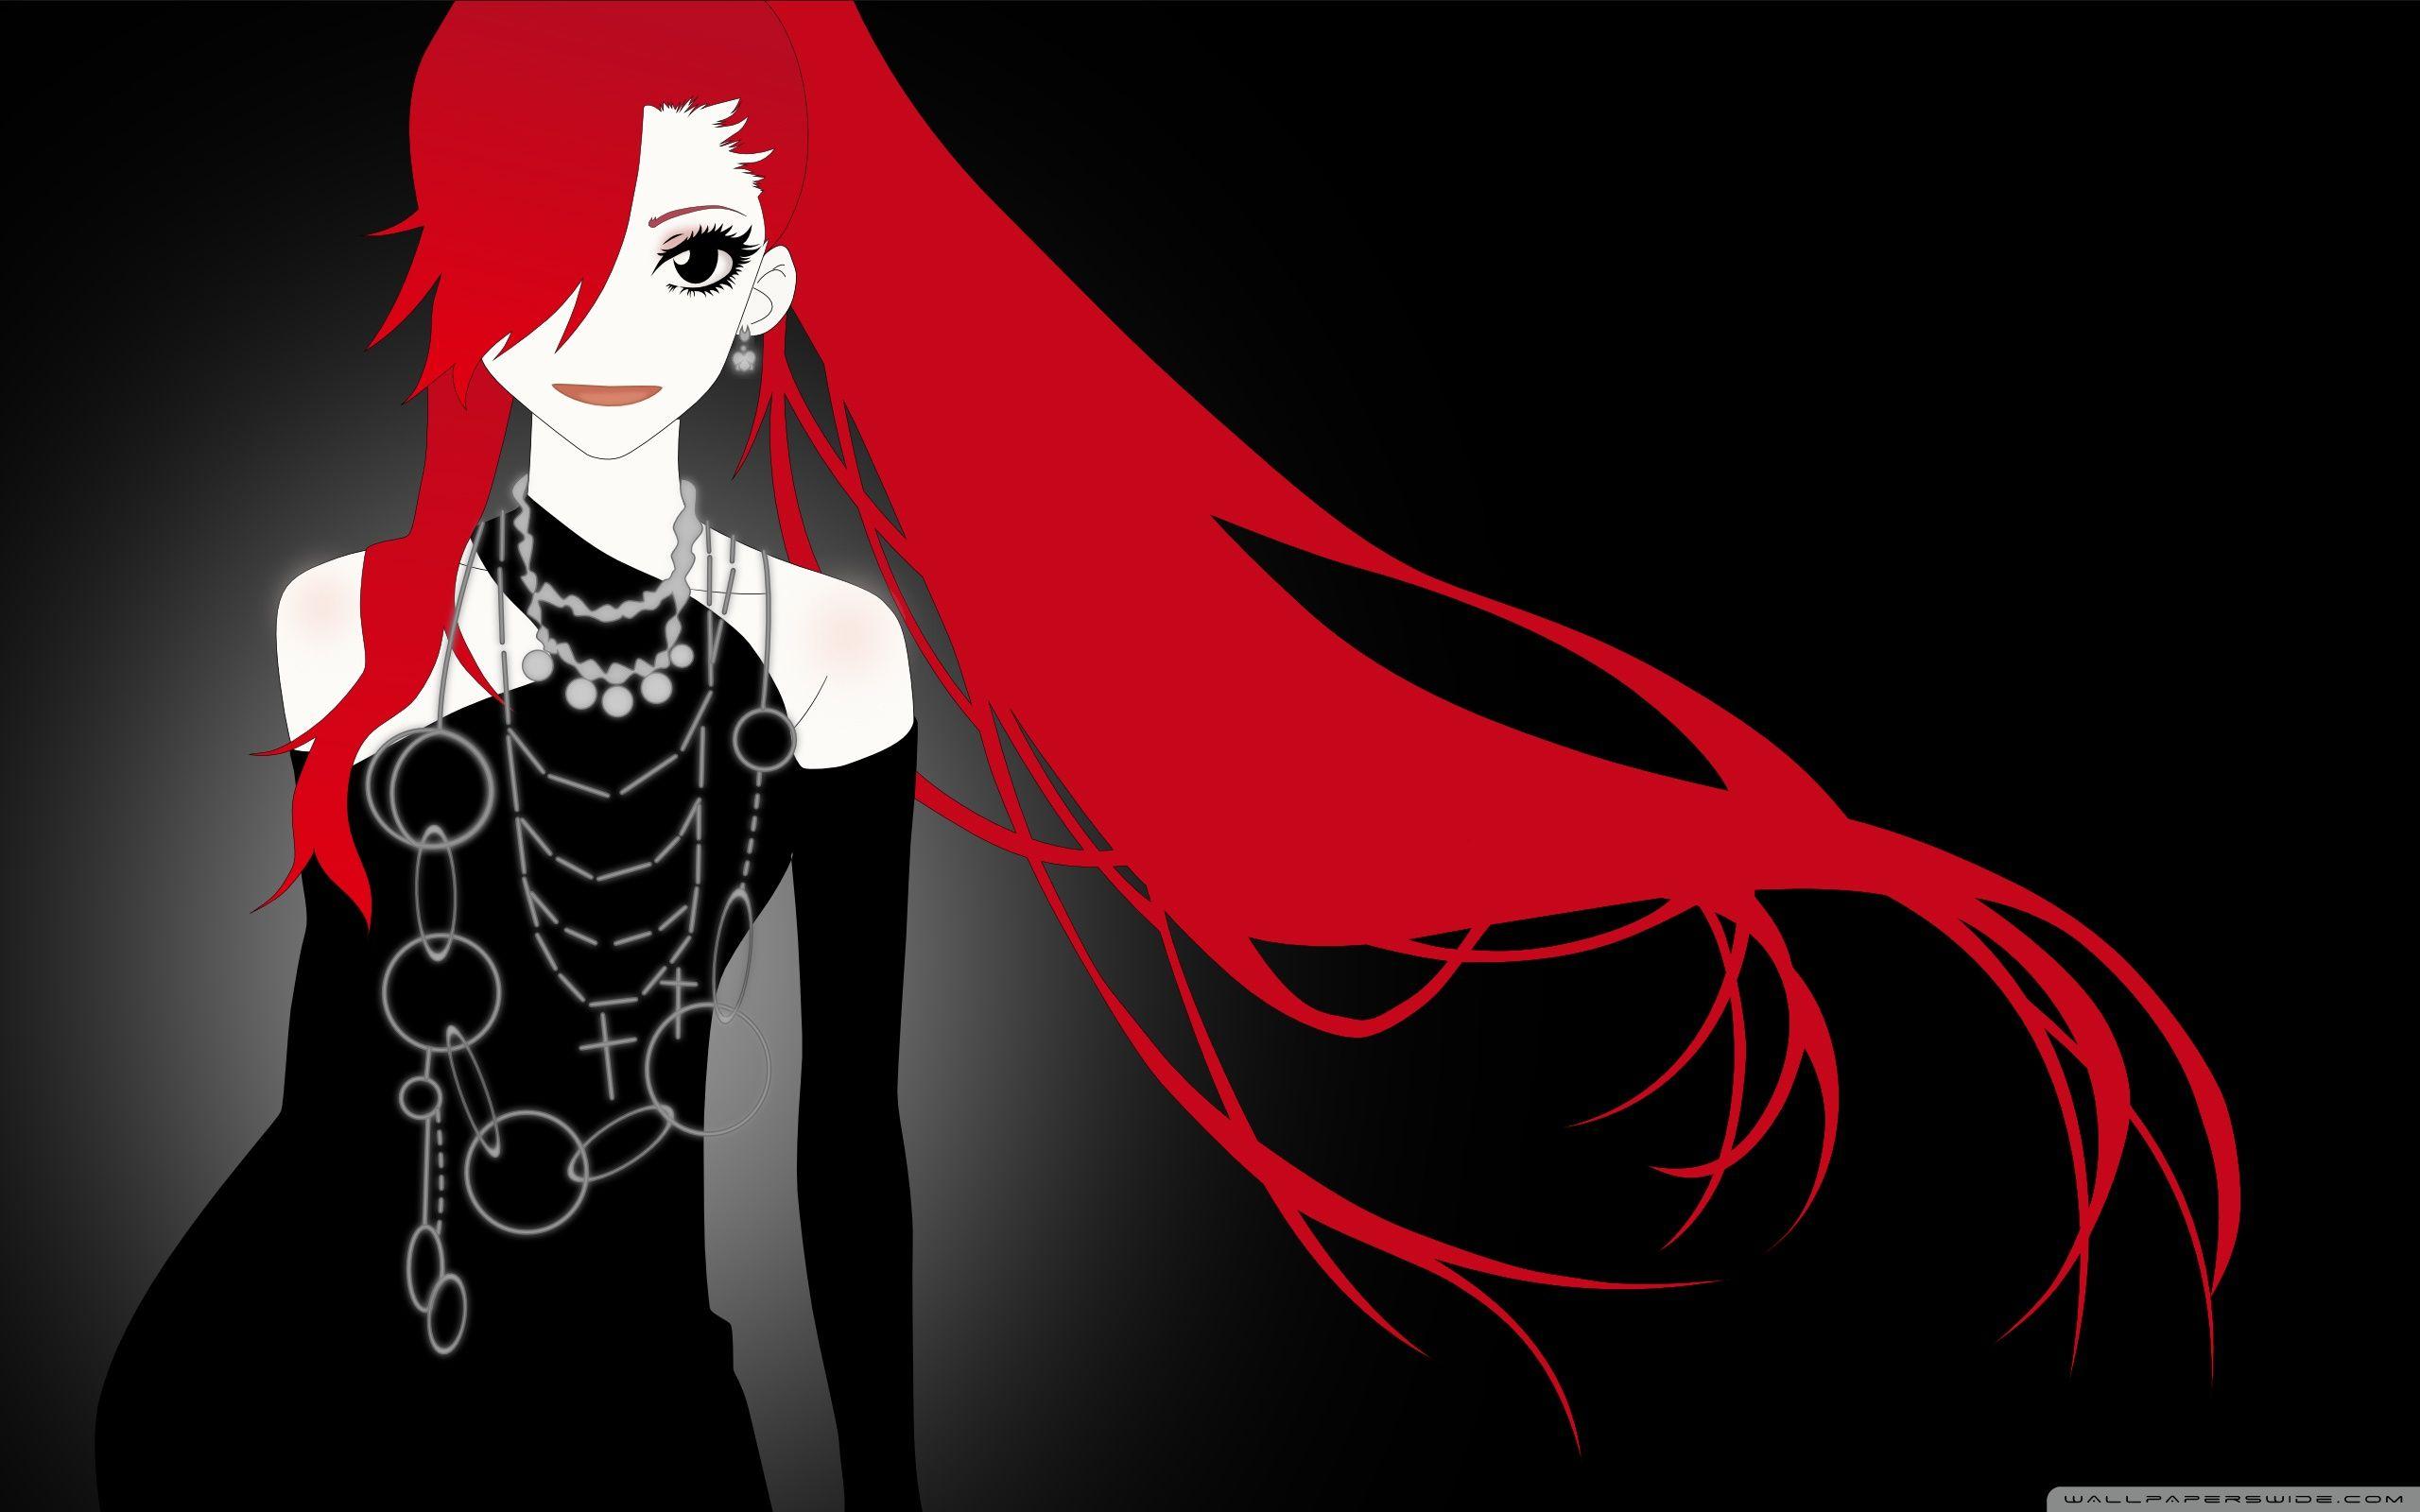 Anime Girl With Red Hair Ultra HD Desktop Background Wallpaper for 4K UHD TV, Tablet